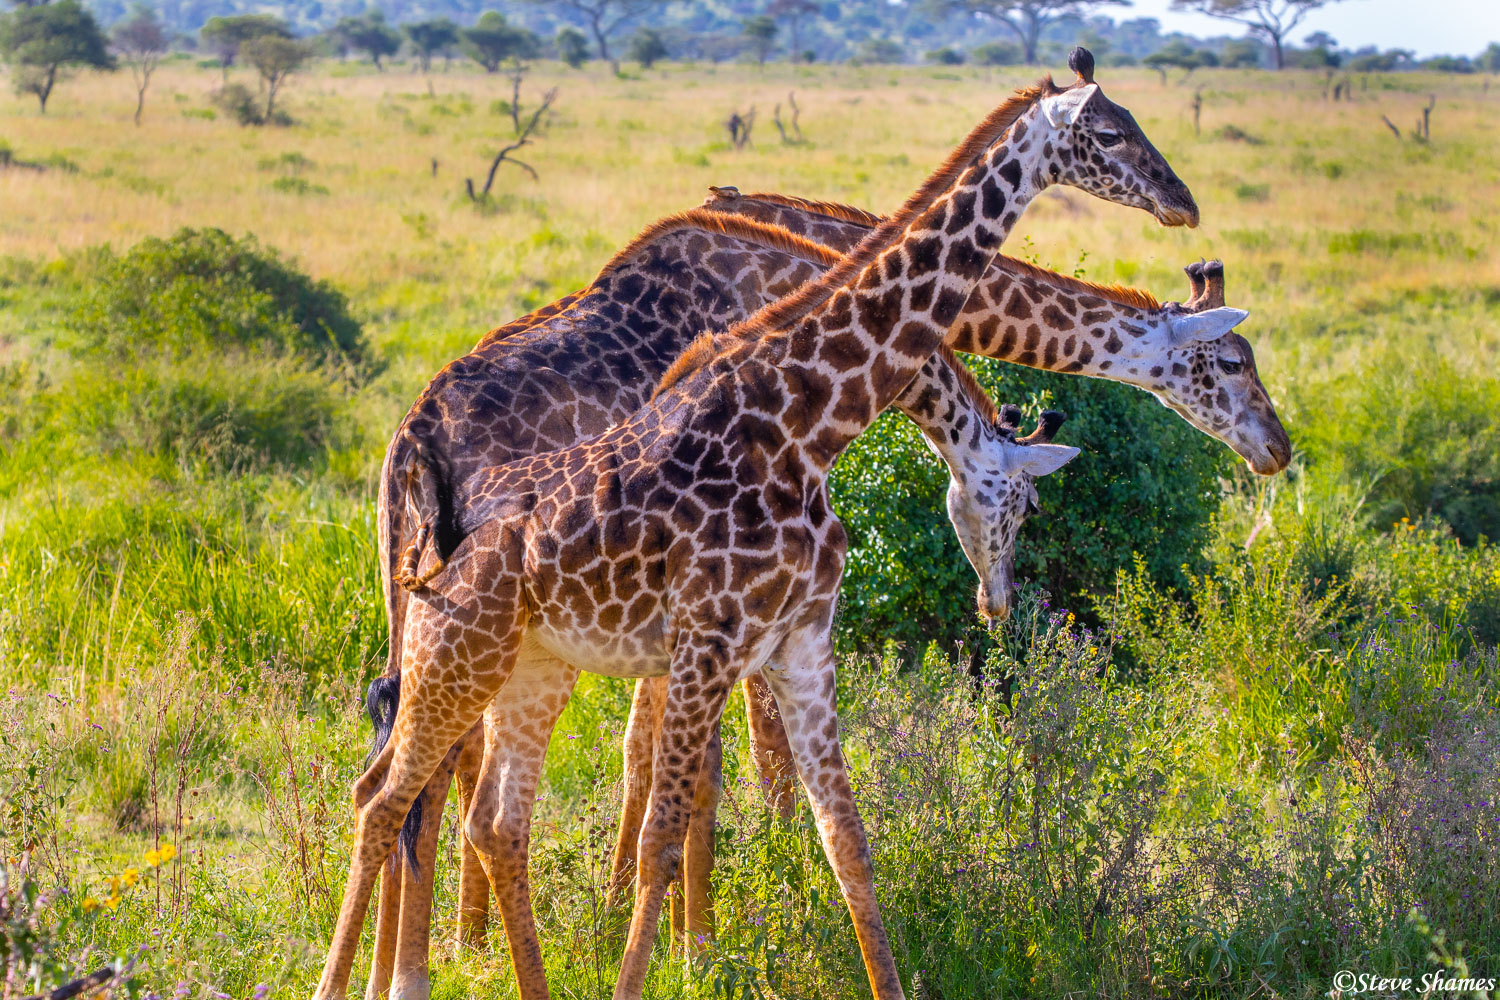 Three feeding giraffes. I like the way multiple giraffes mingle.